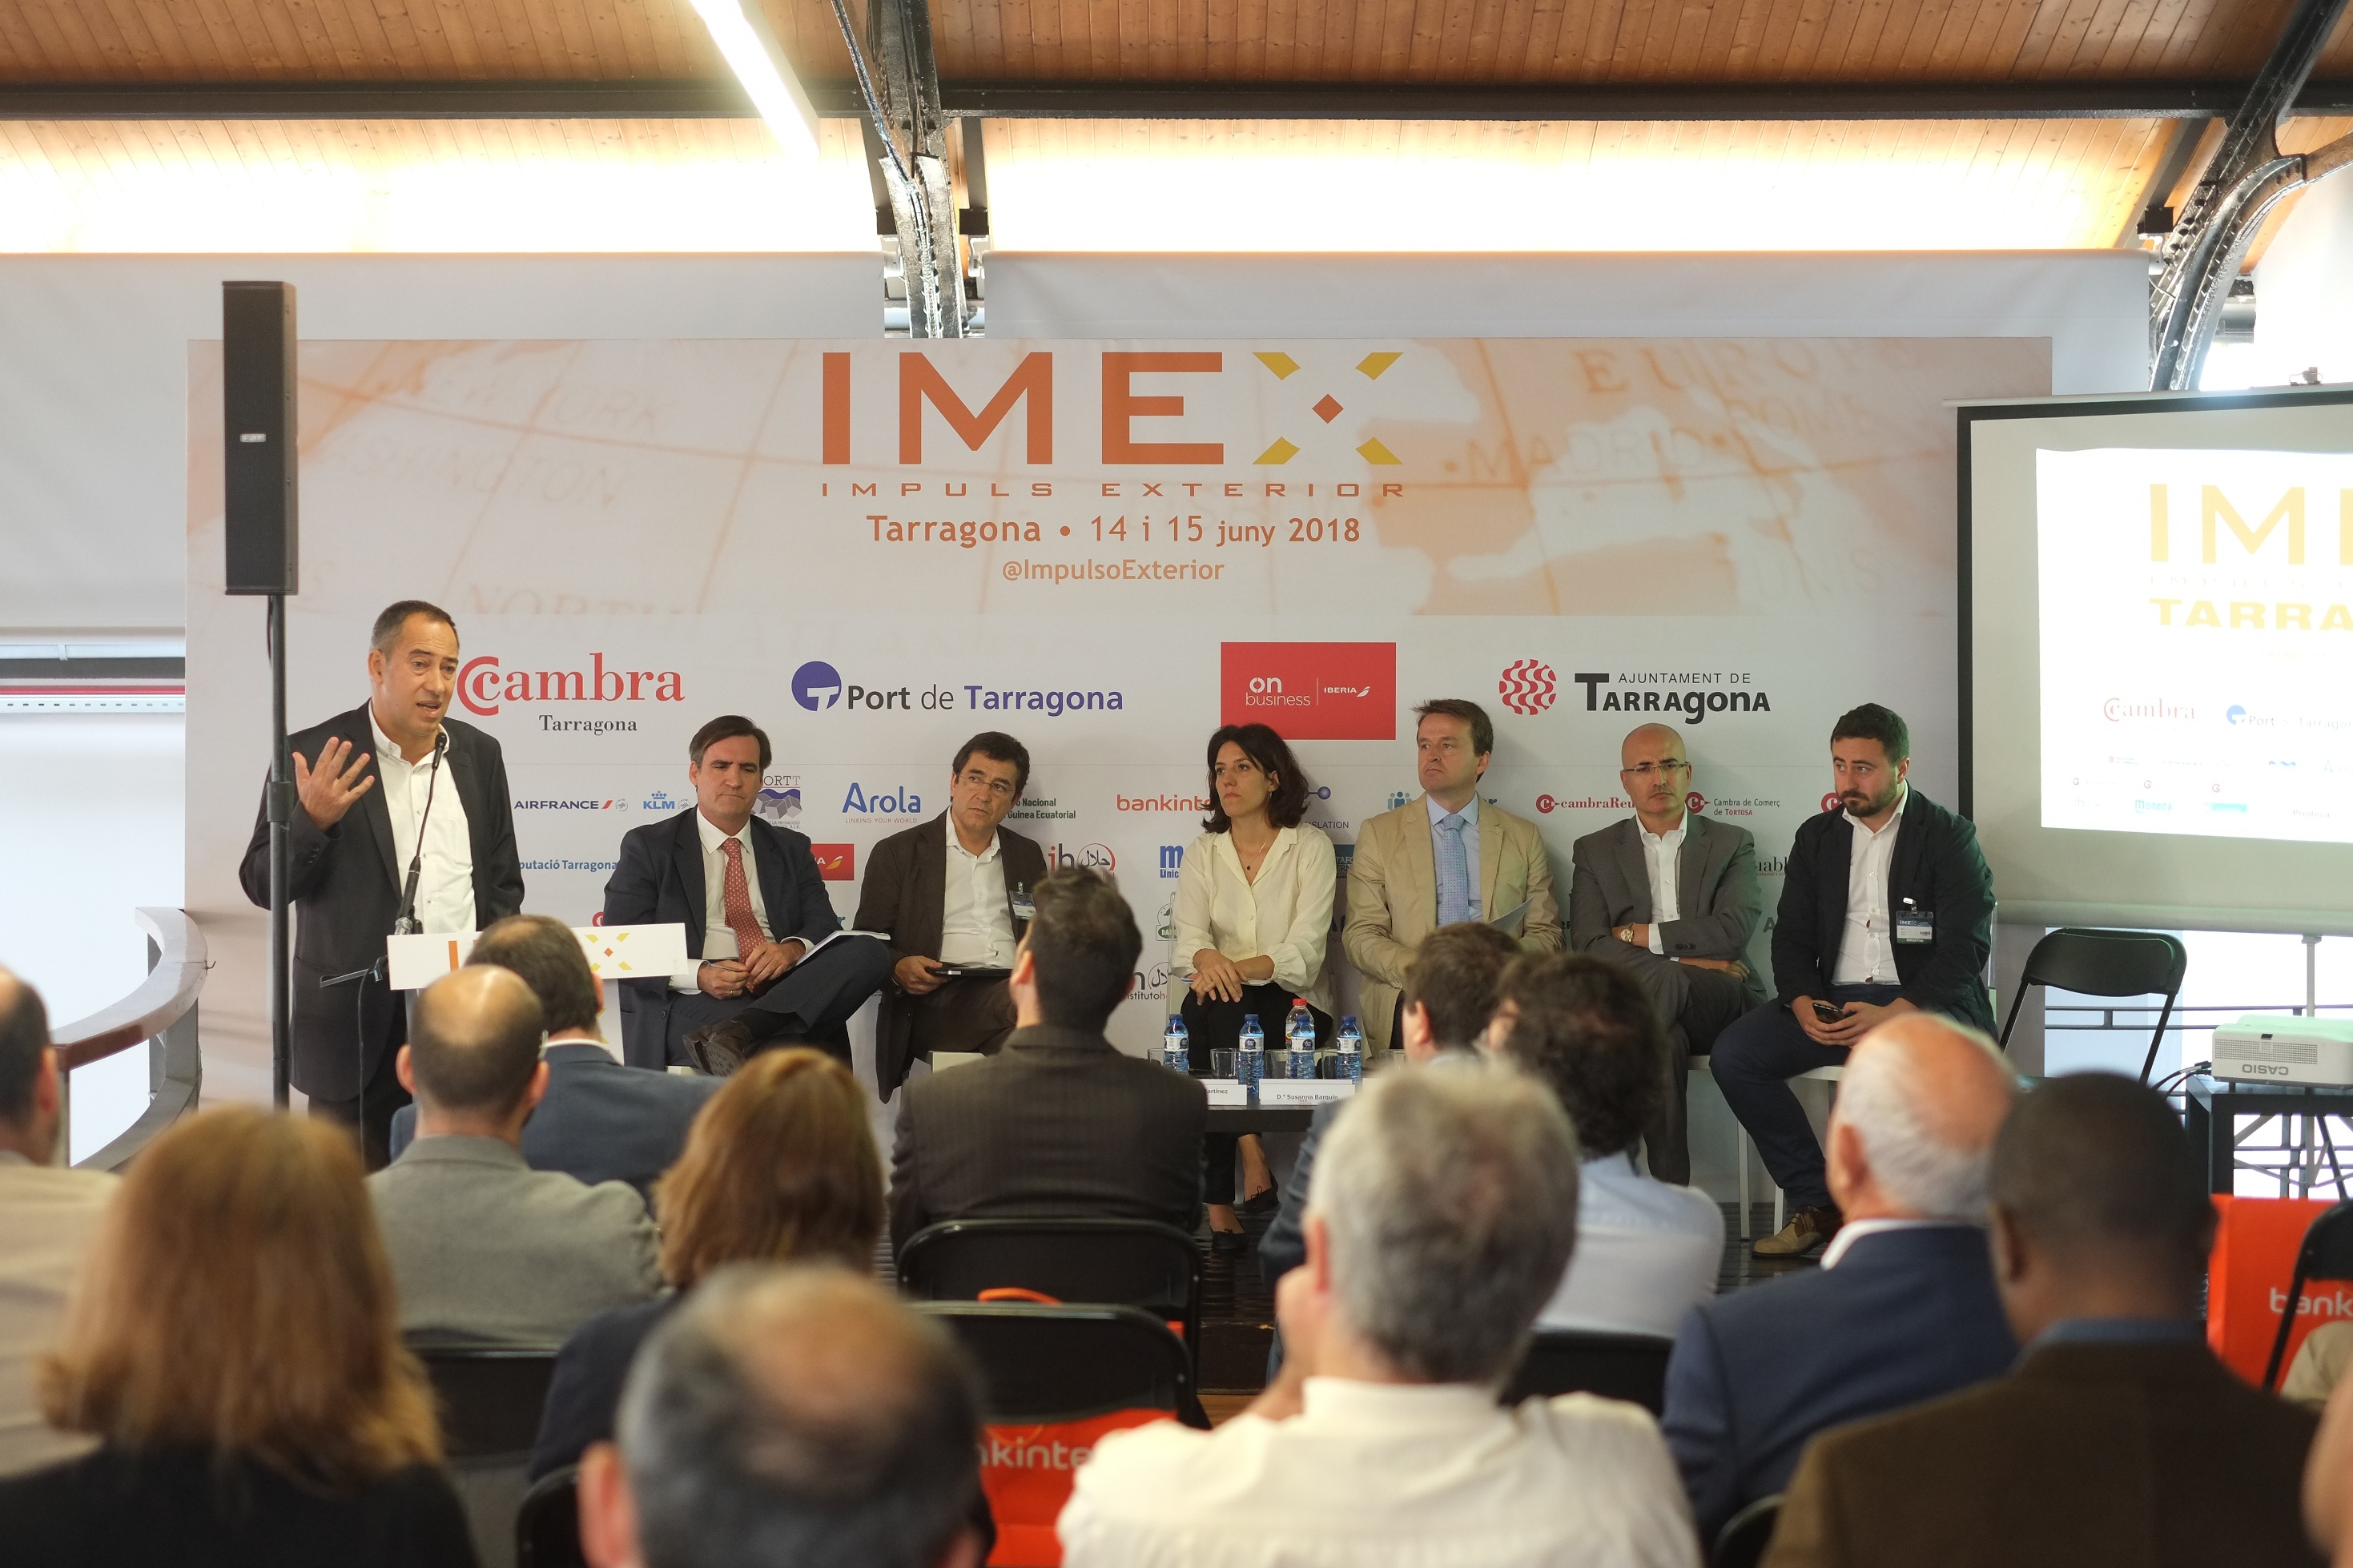 The IMEX Fair opens successfully in Tarragona